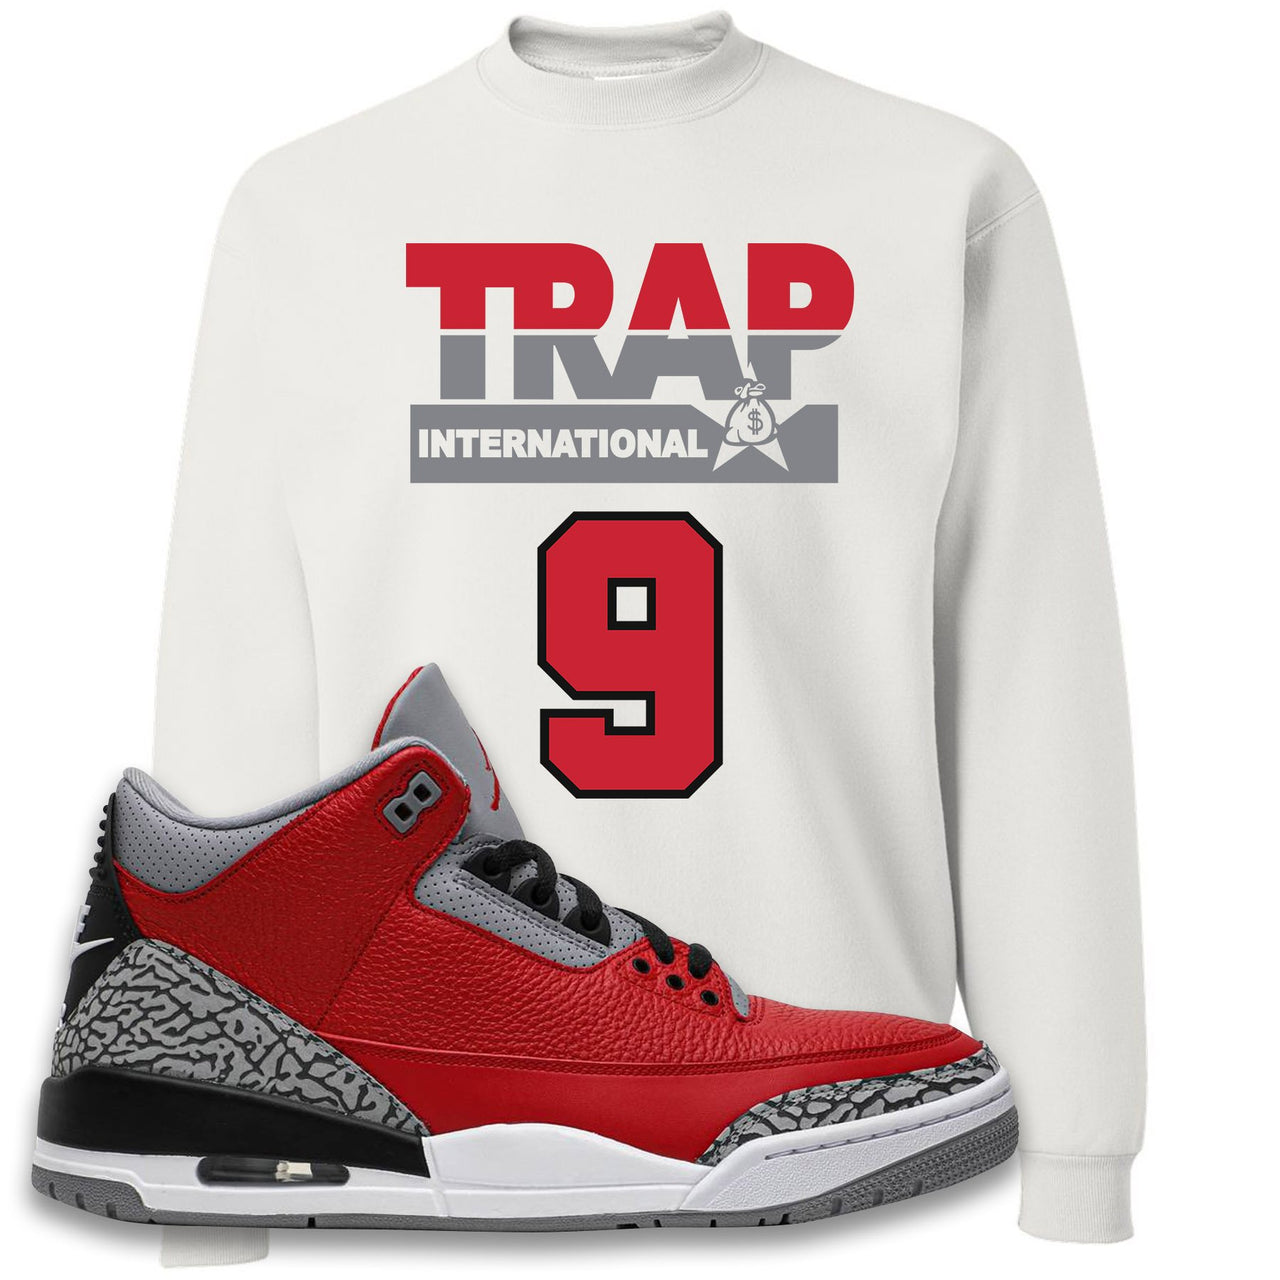 Chicago Exclusive Jordan 3 Red Cement Sneaker White Crewneck Sweatshirt | Crewneck to match Jordan 3 All Star Red Cement Shoes | Trap International